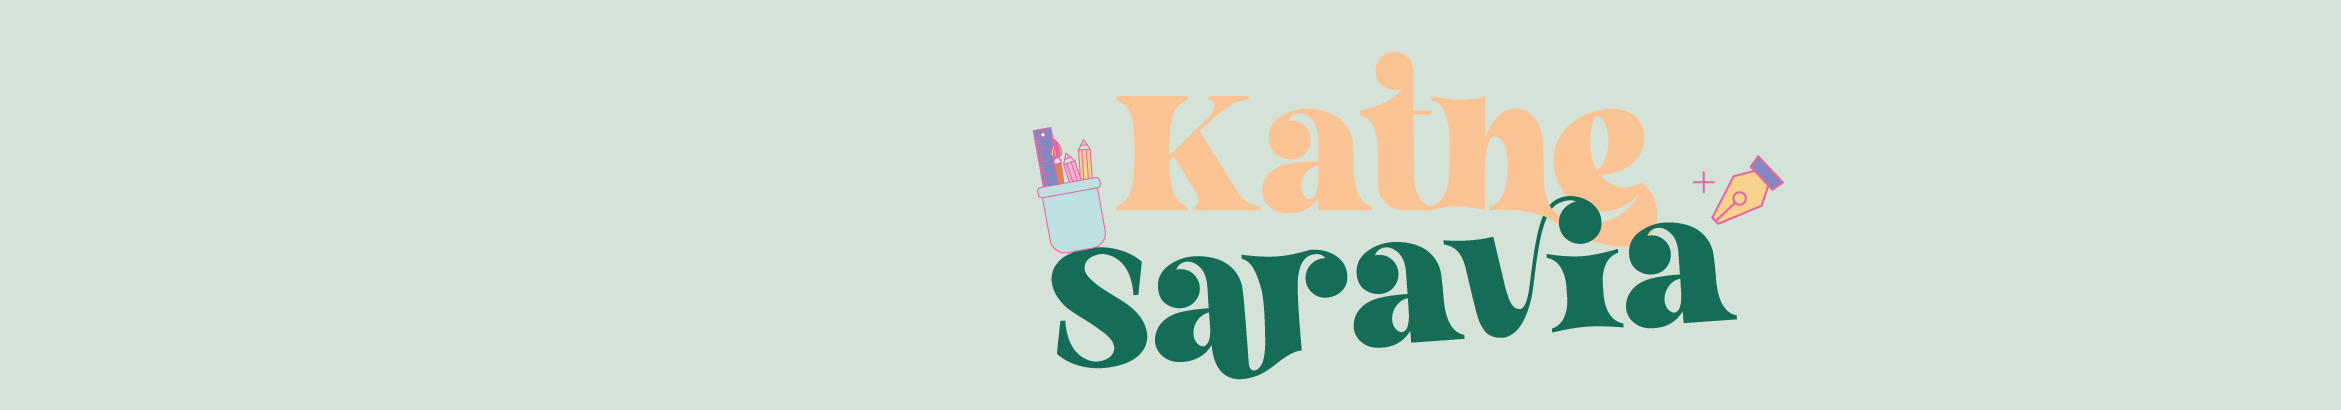 Kathe Saravia's profile banner